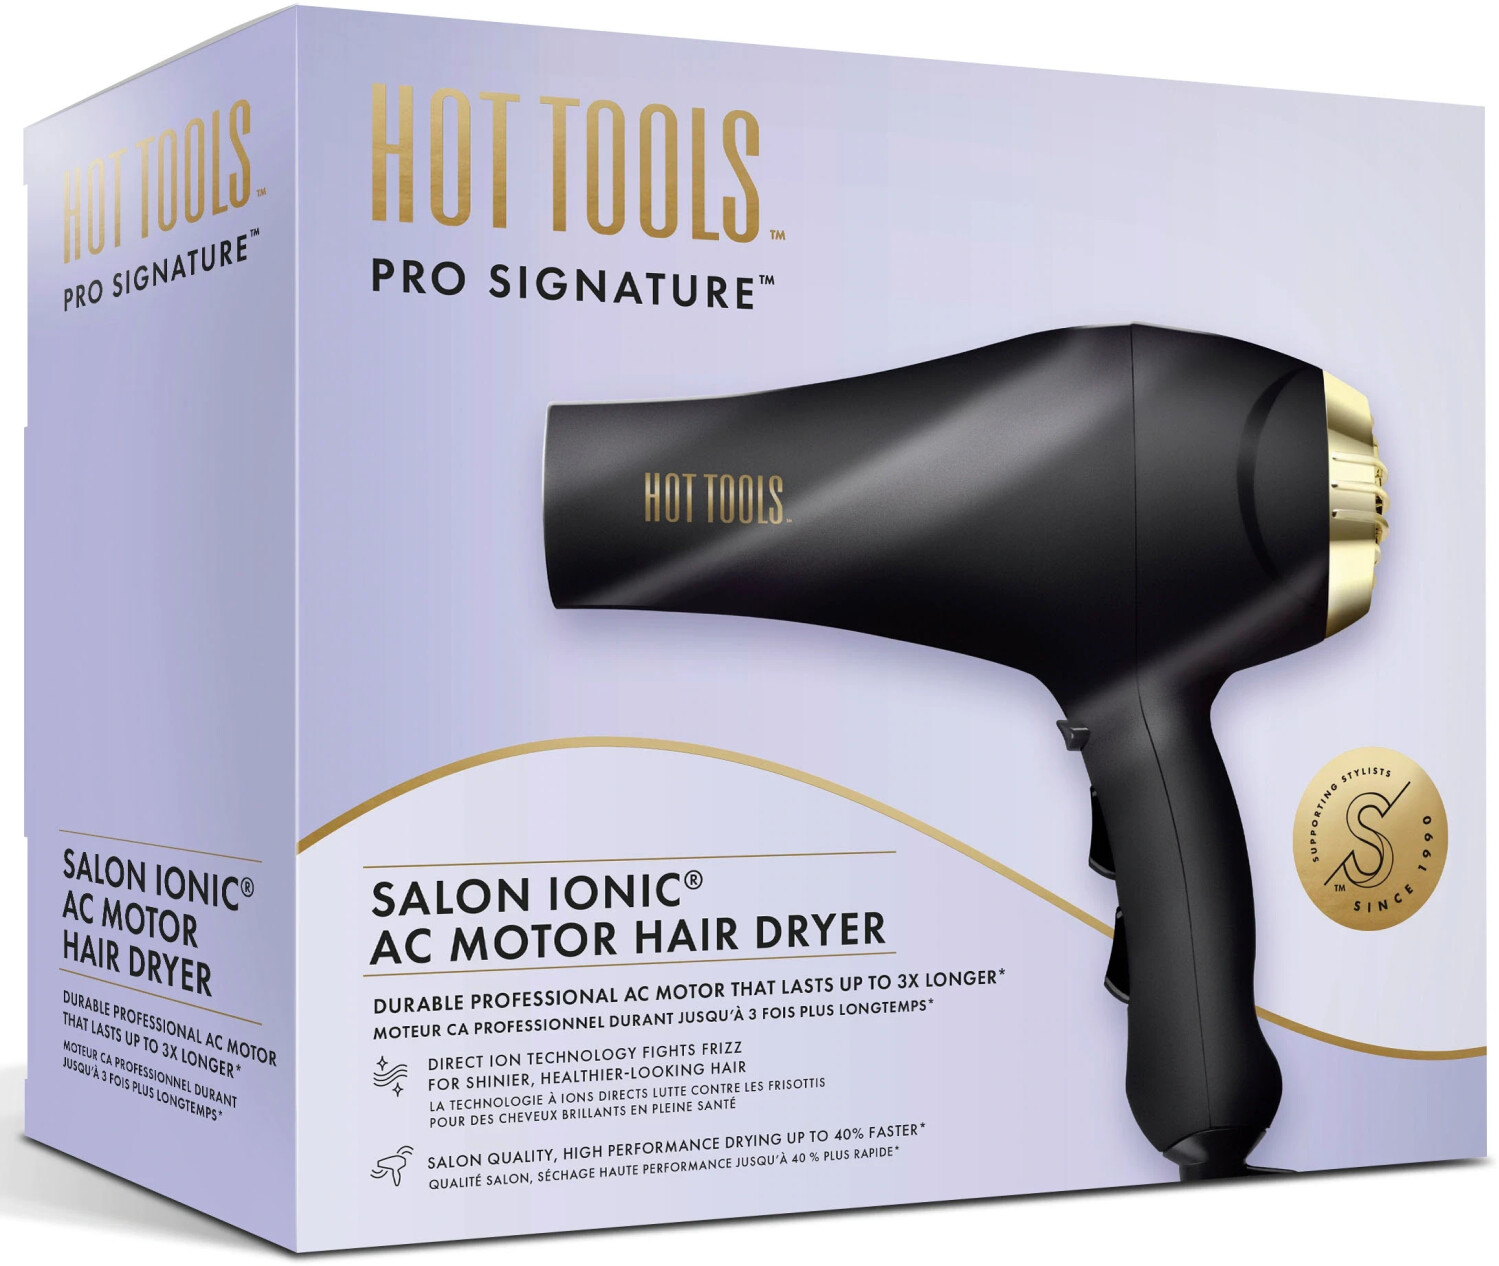 Hot Tools Pro Signature Salon Ionic black/gold (HTDR5581UKE) ab 62,99 € |  Preisvergleich bei